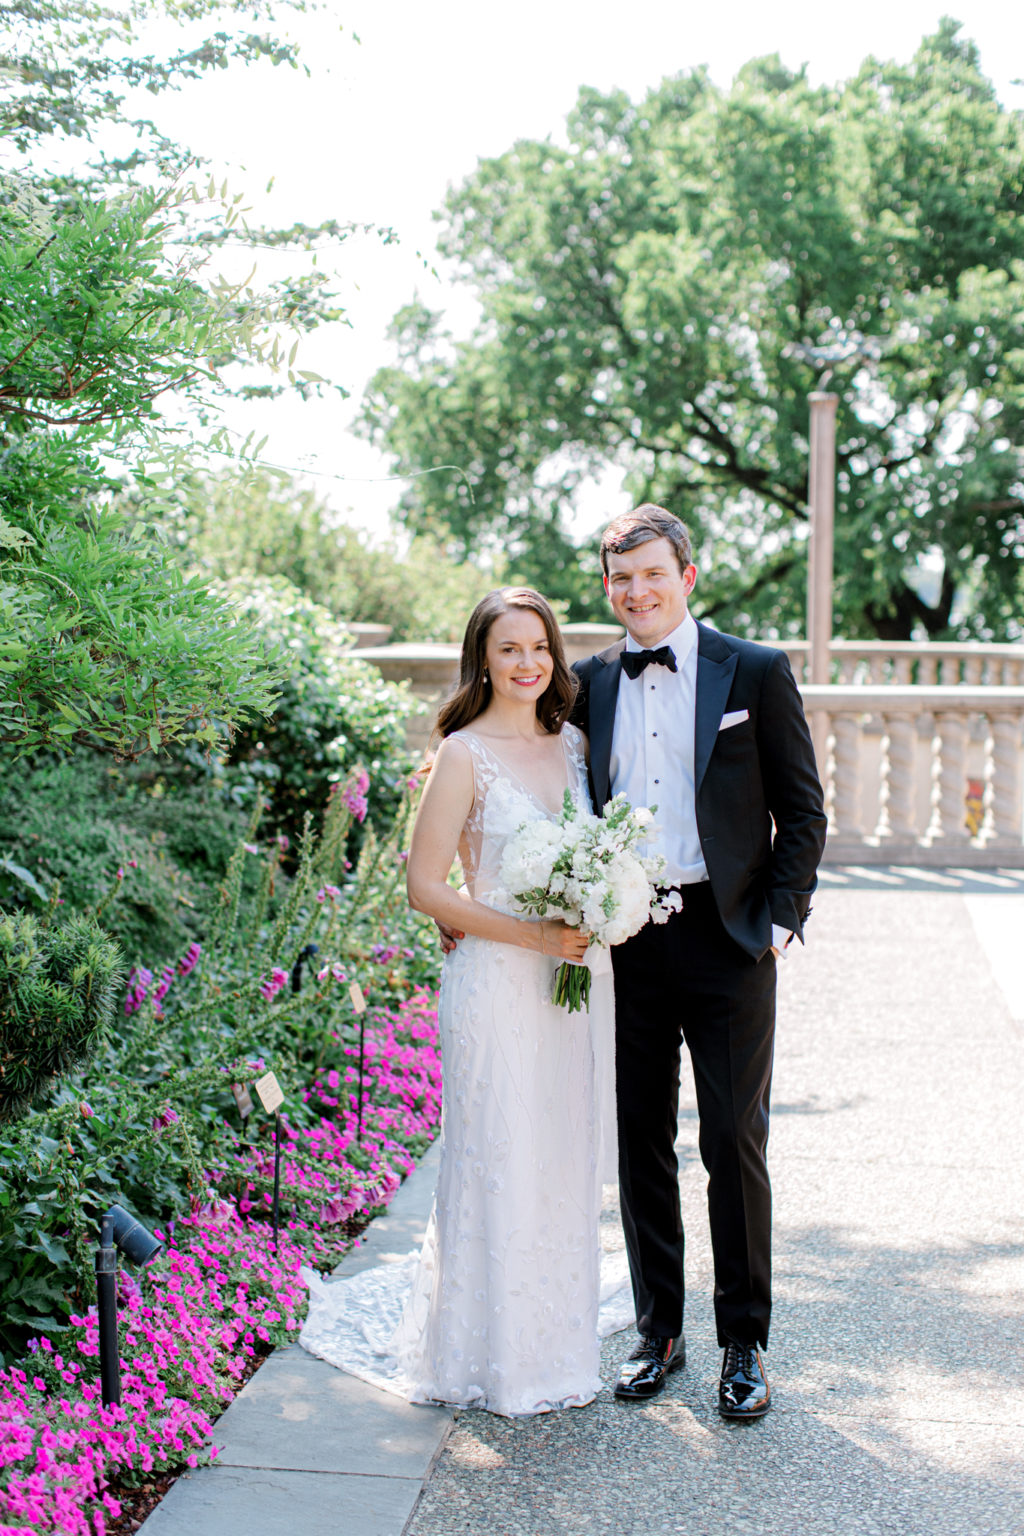 Genevieve And Matt S Wedding At The Dallas Arboretum Dallas Wedding Photography